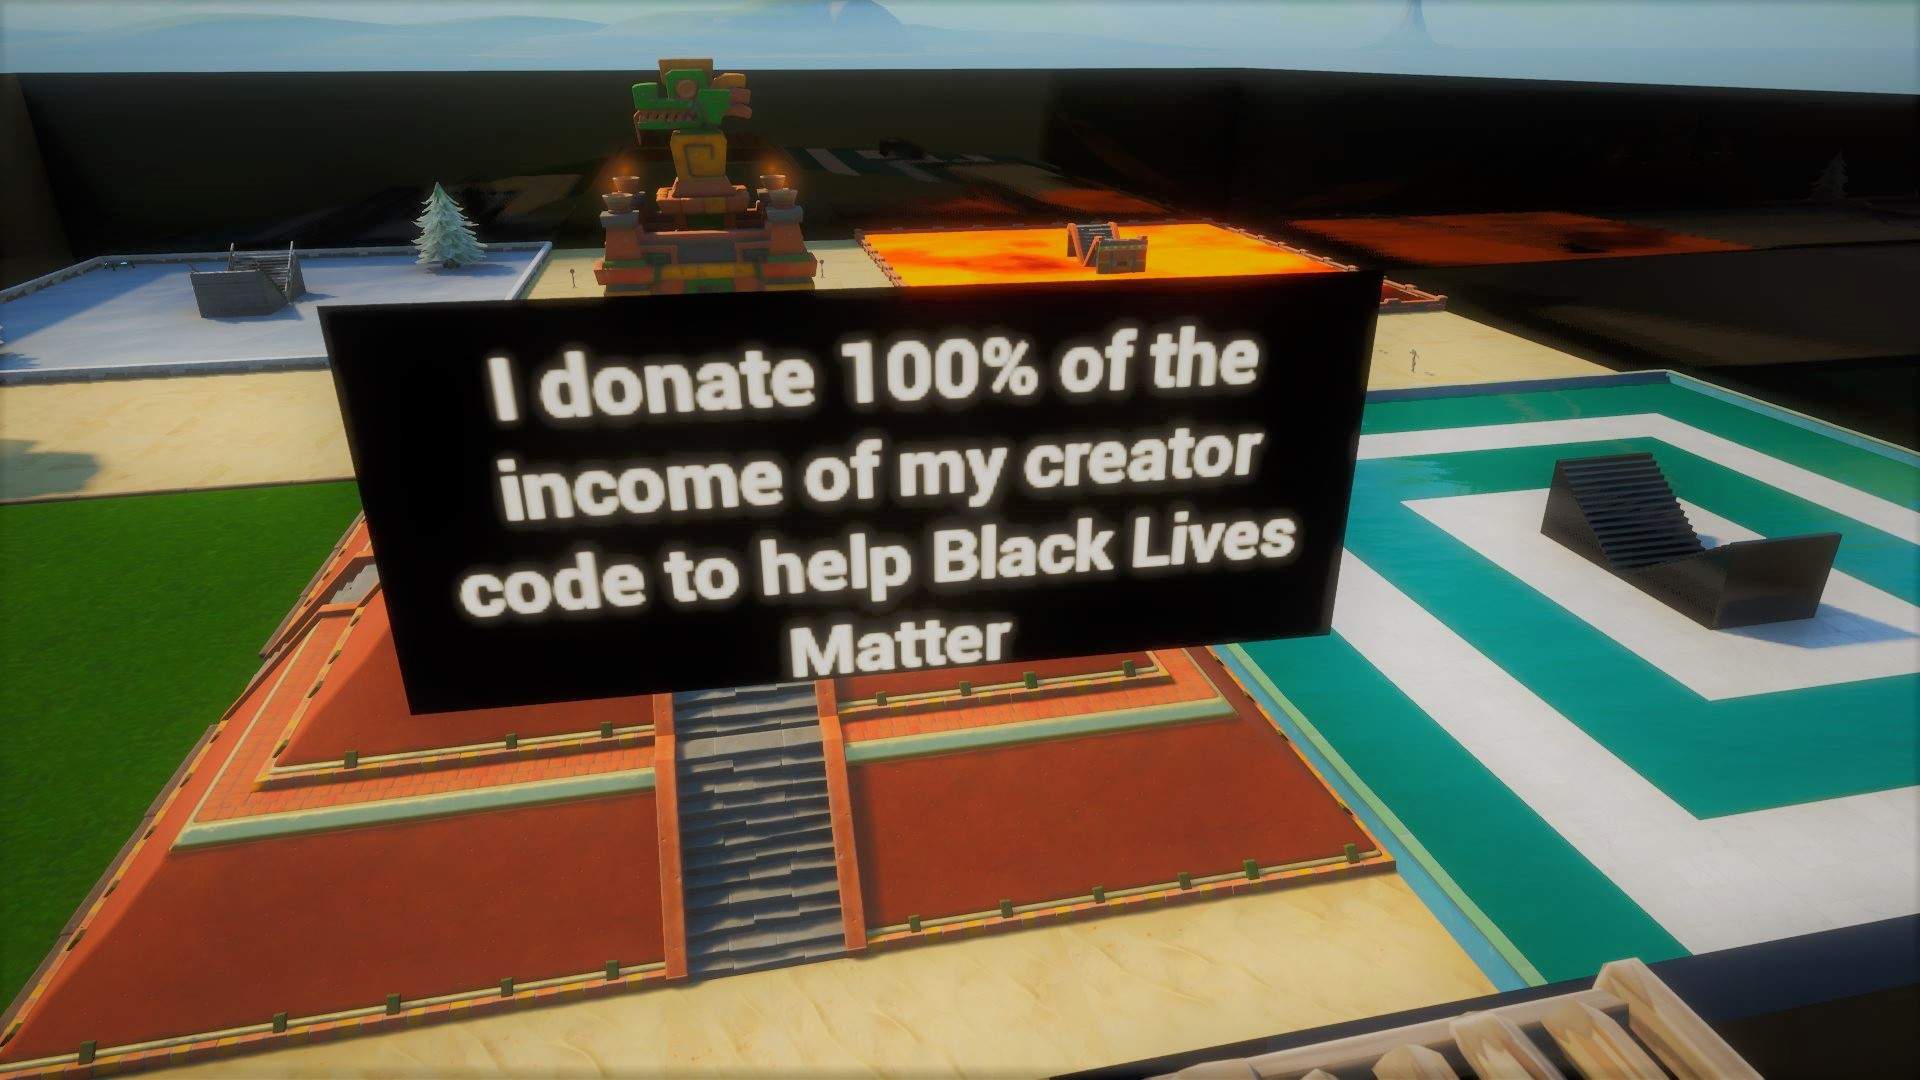 FIGHTING FOR HELP BLACK LIVES MATTER